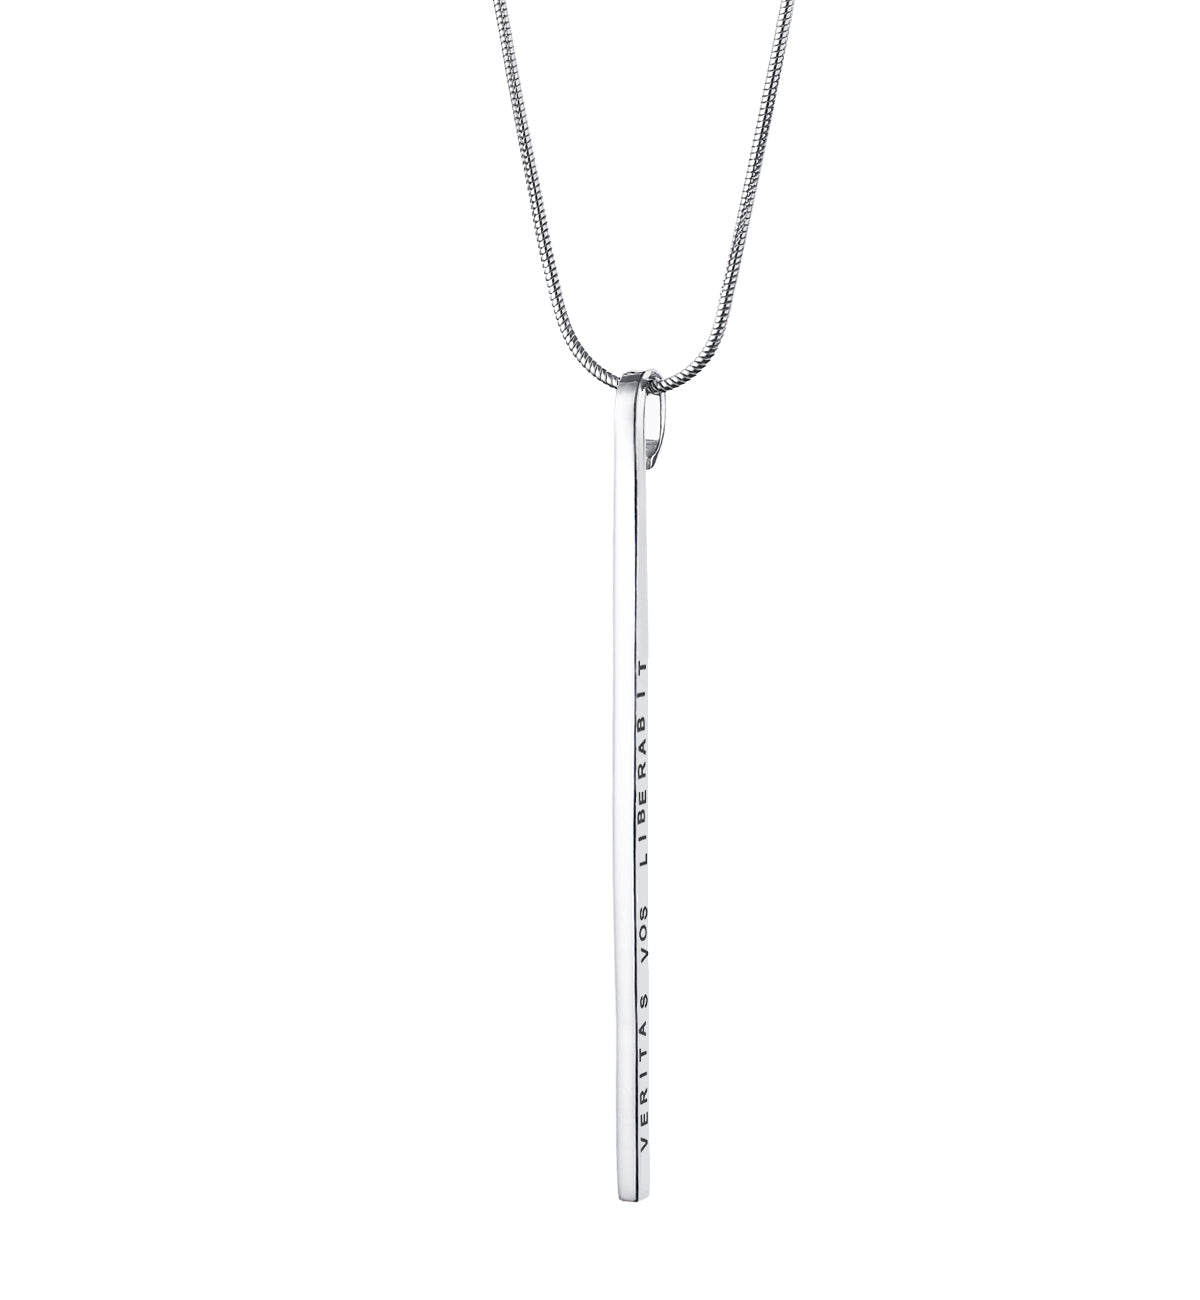 Thin Pendant Necklace